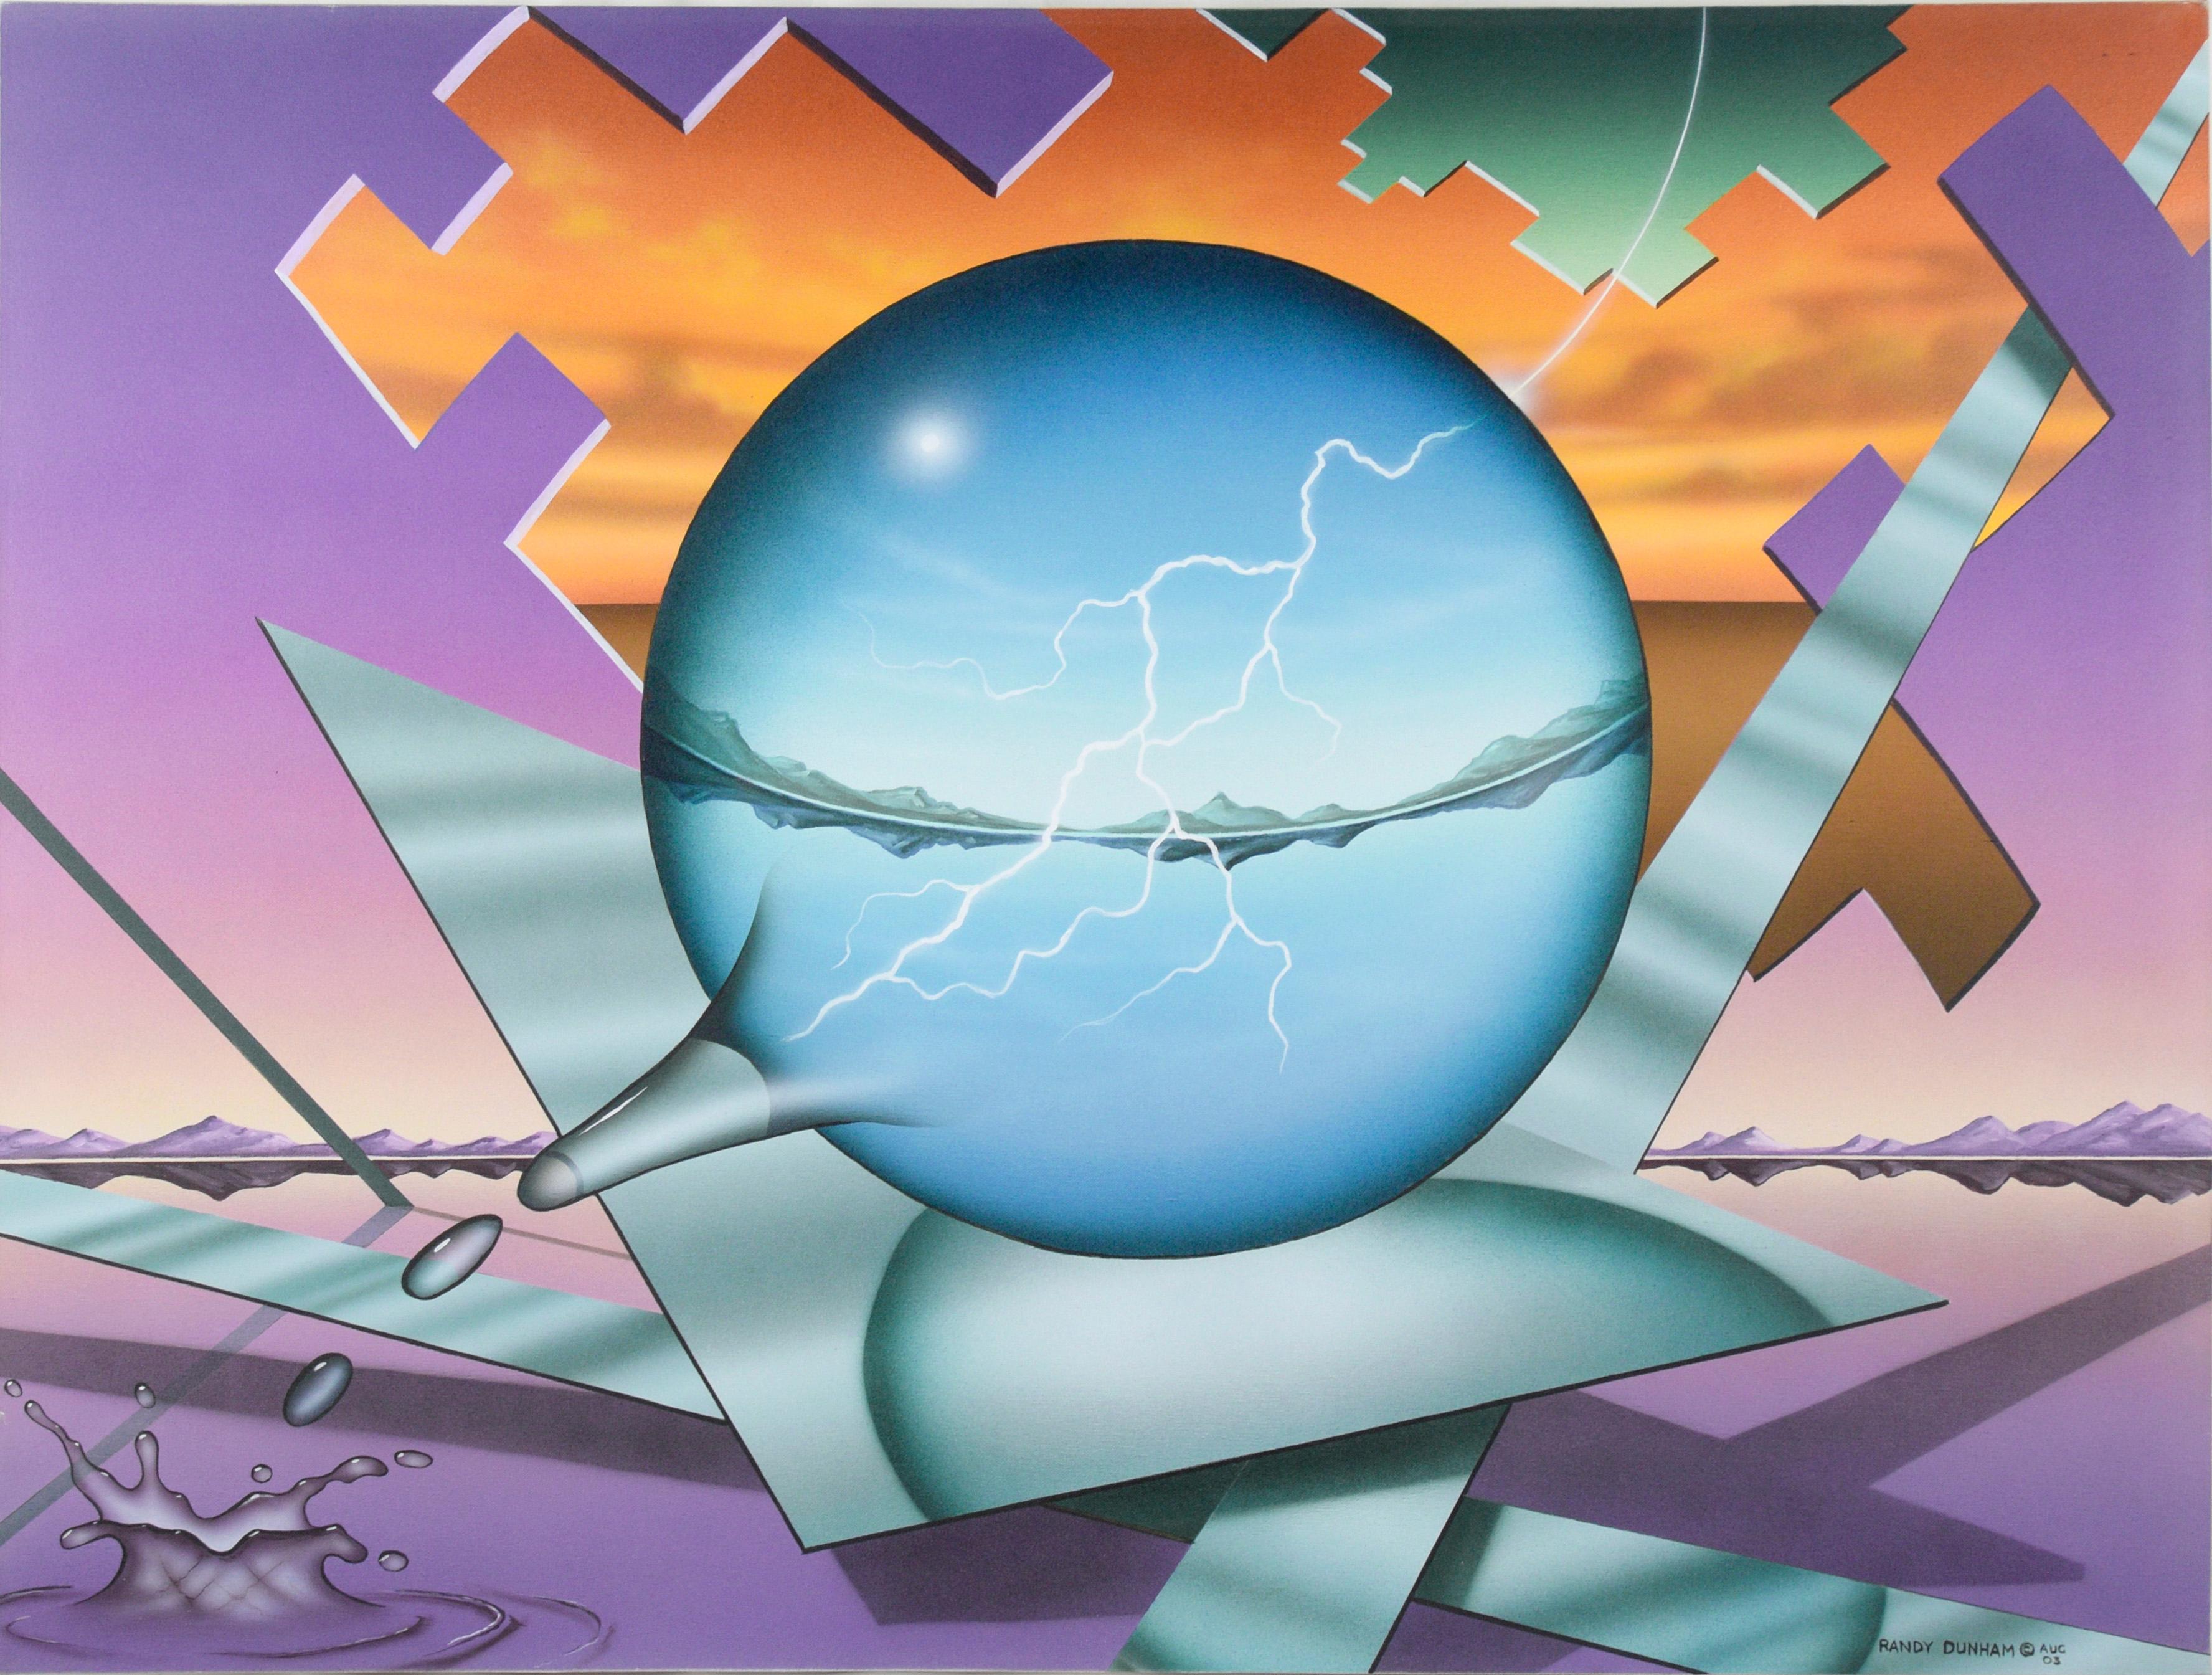 Randy Dunham Landscape Painting - "Striking" Natures Balance - Geometric Surrealist Landscape in Acrylic on Canvas